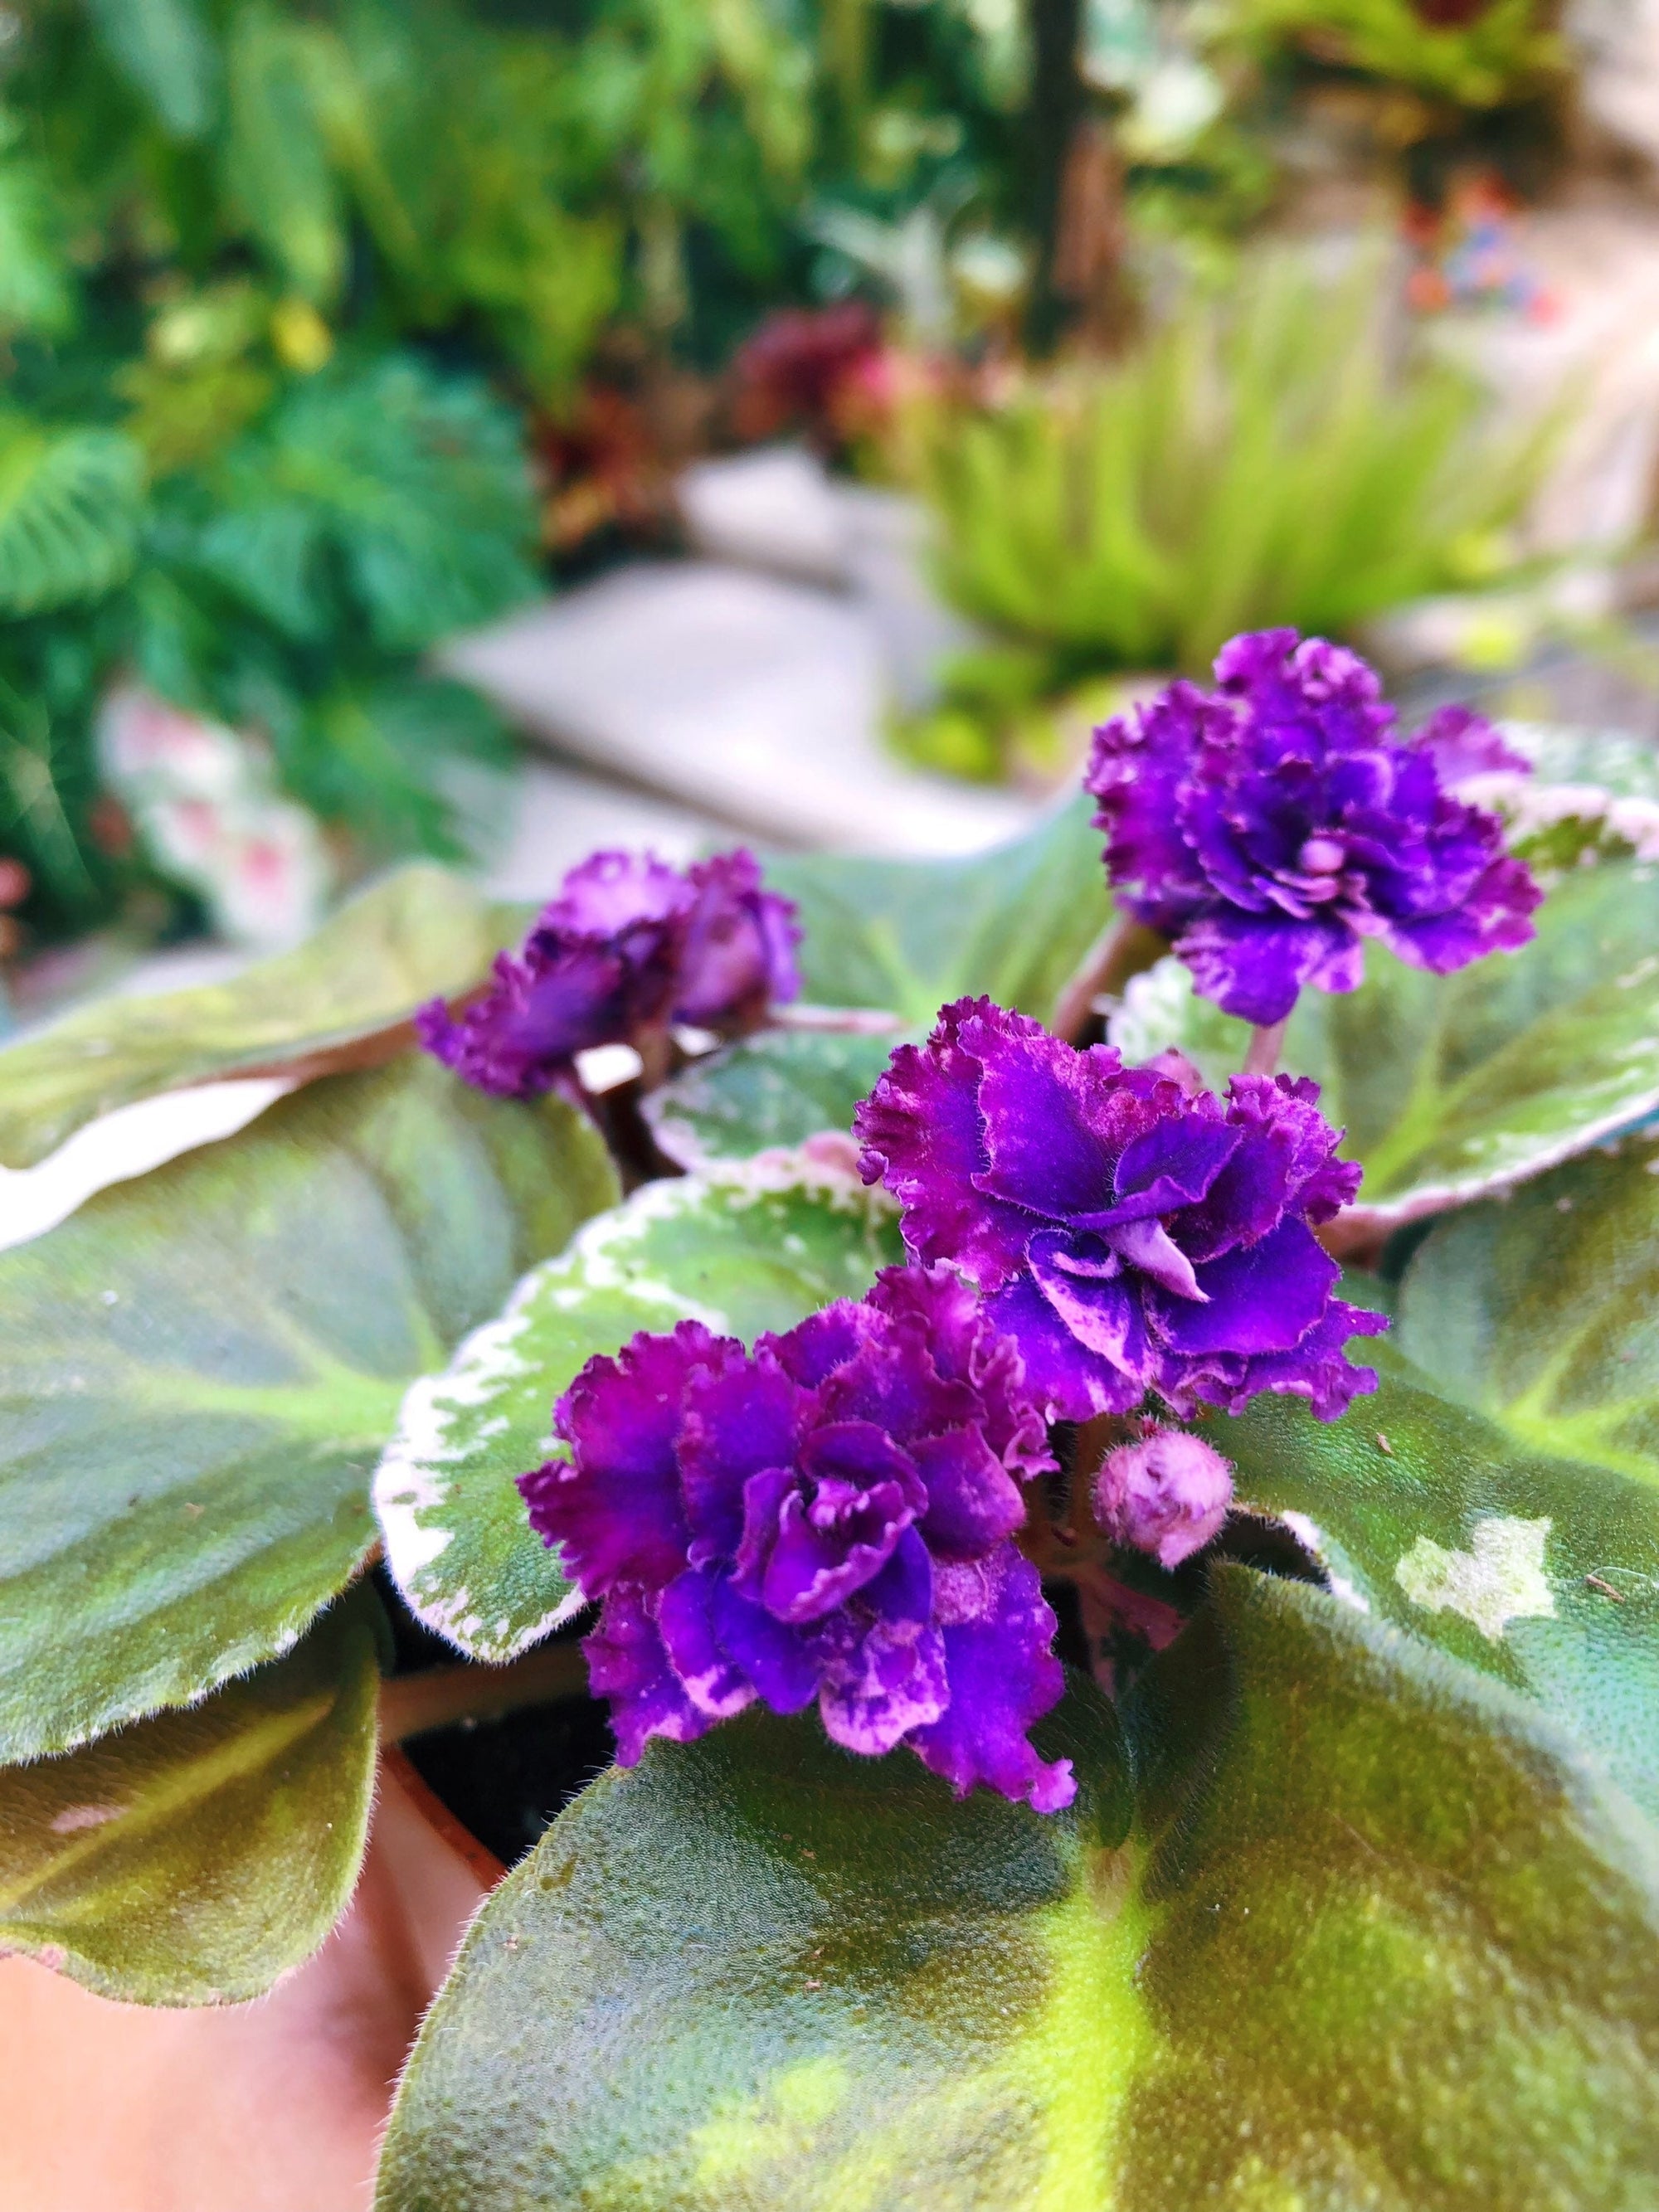 Live house plant variegated bloom African Violet ‘Lyon’s Private Dancer’ garden 4” flower Potted gift